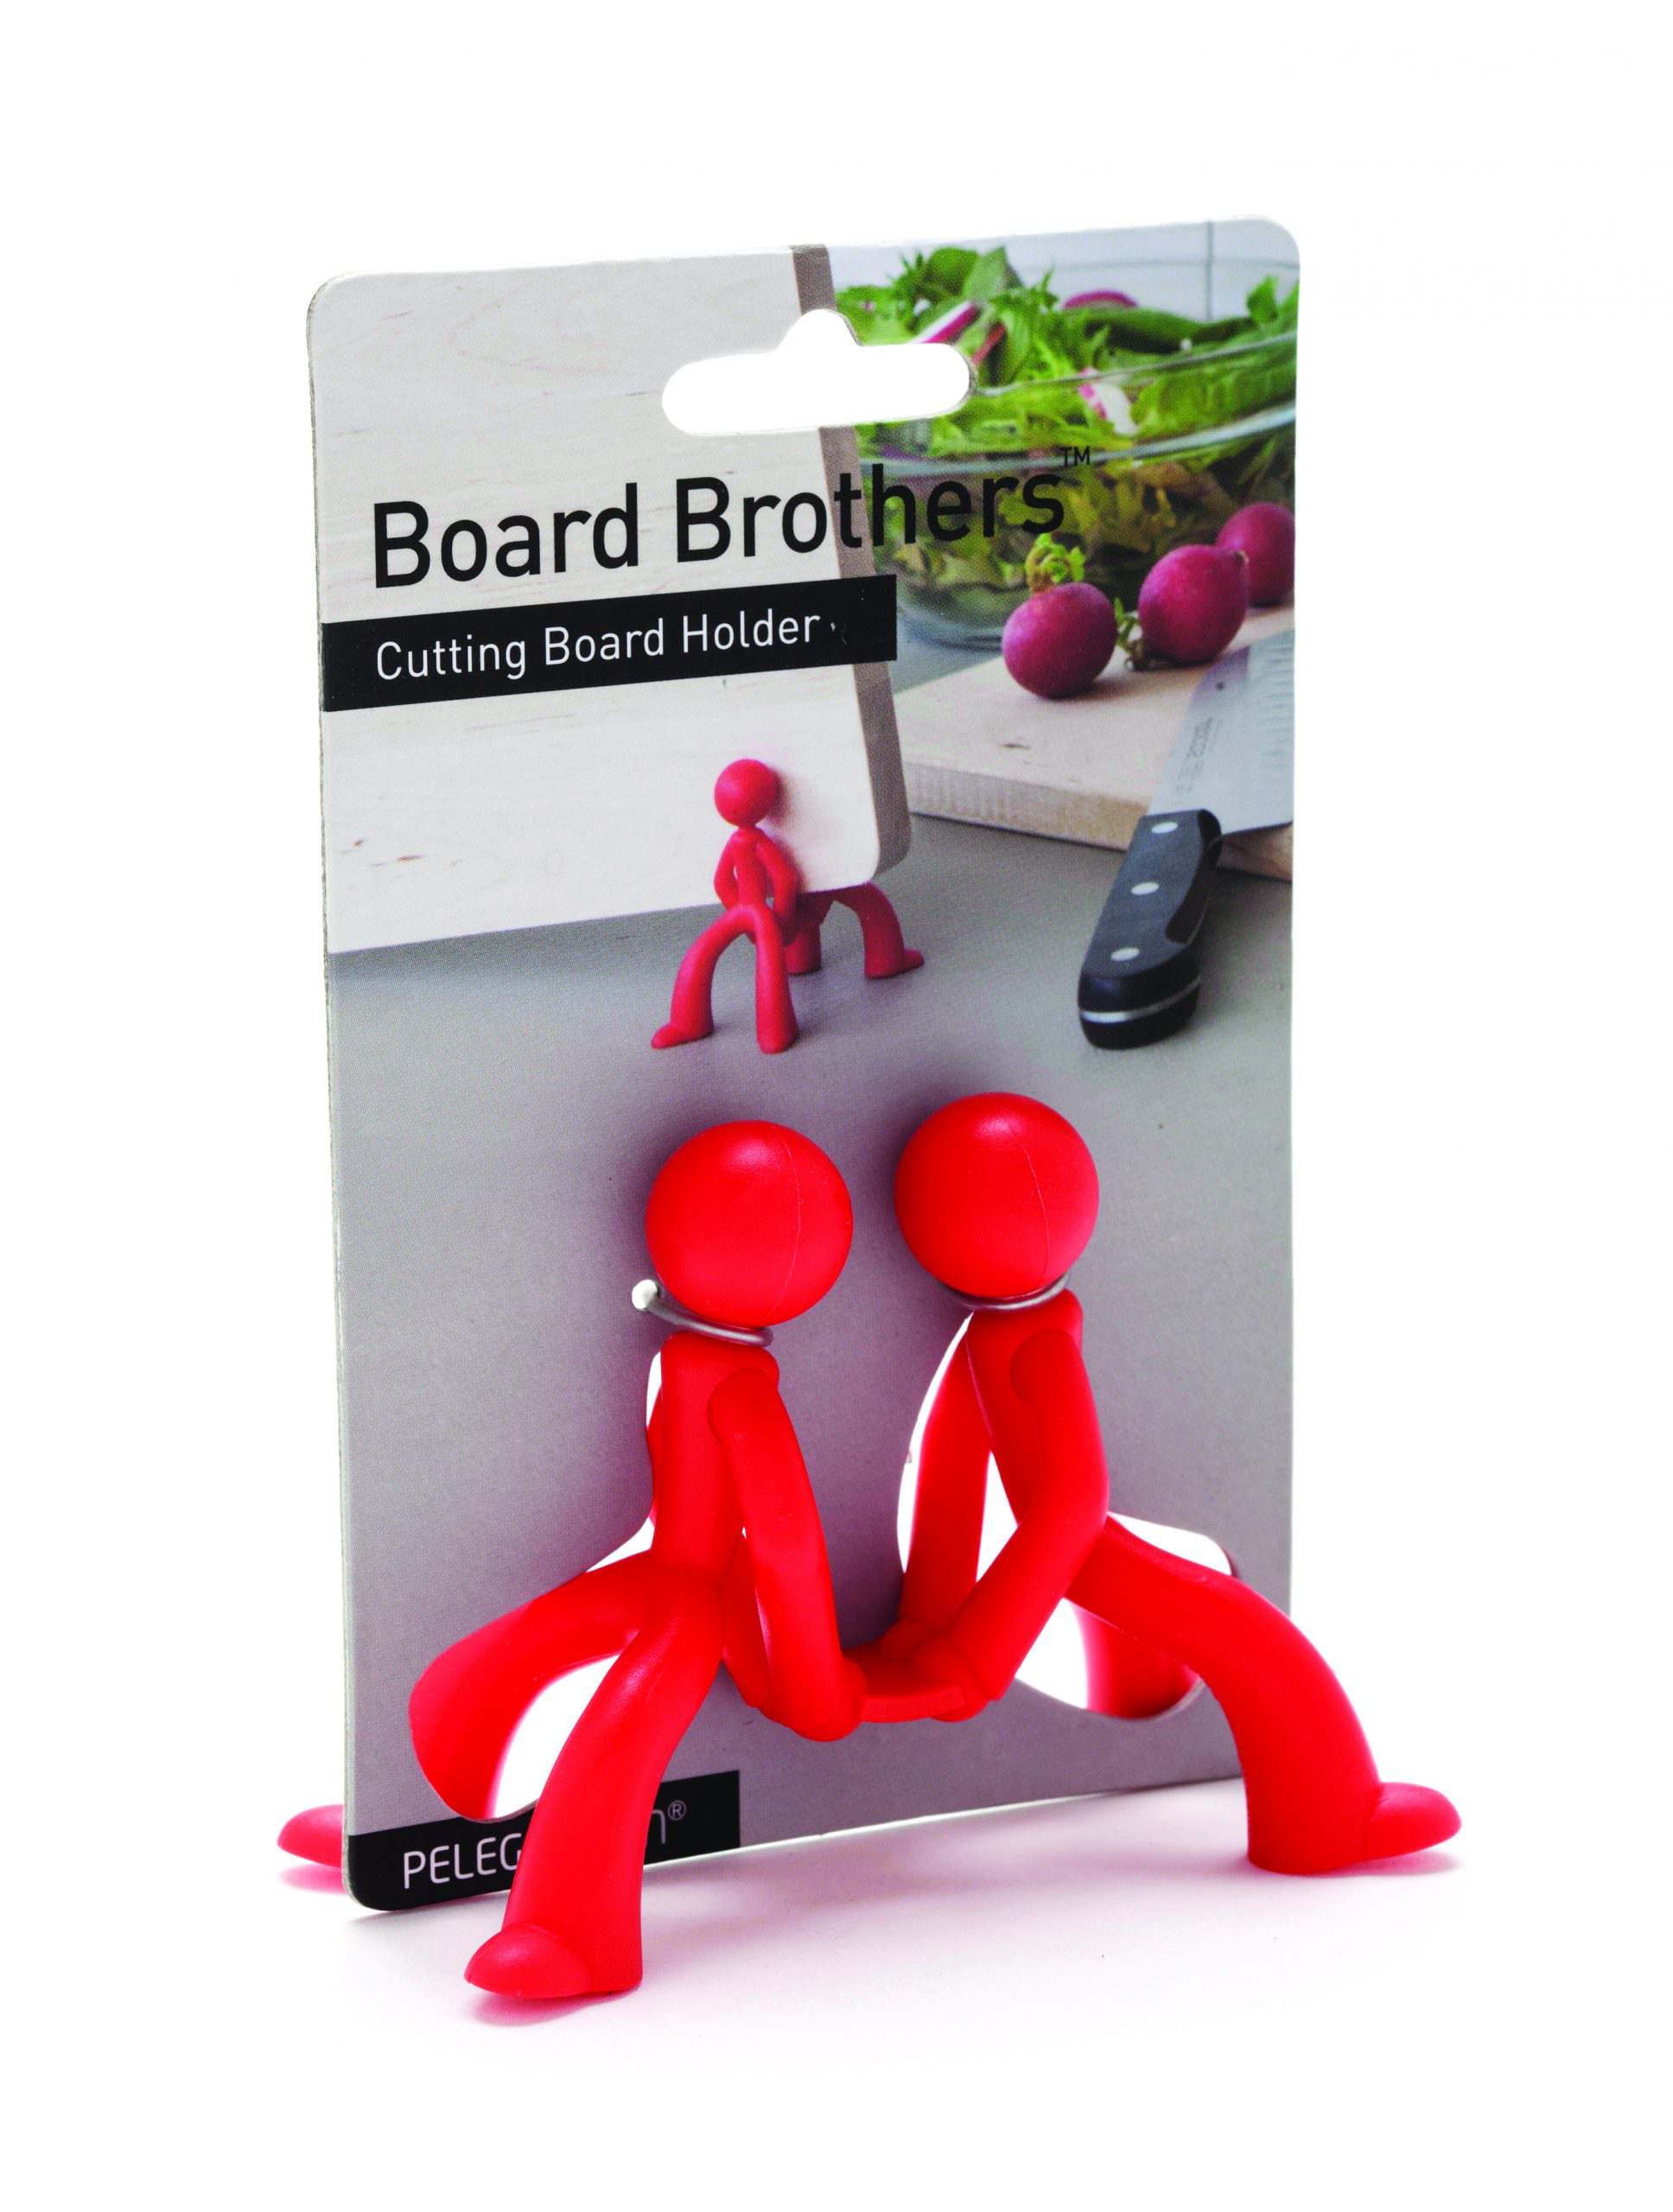 Cutting Board Design Holder Peleg Board Brothers